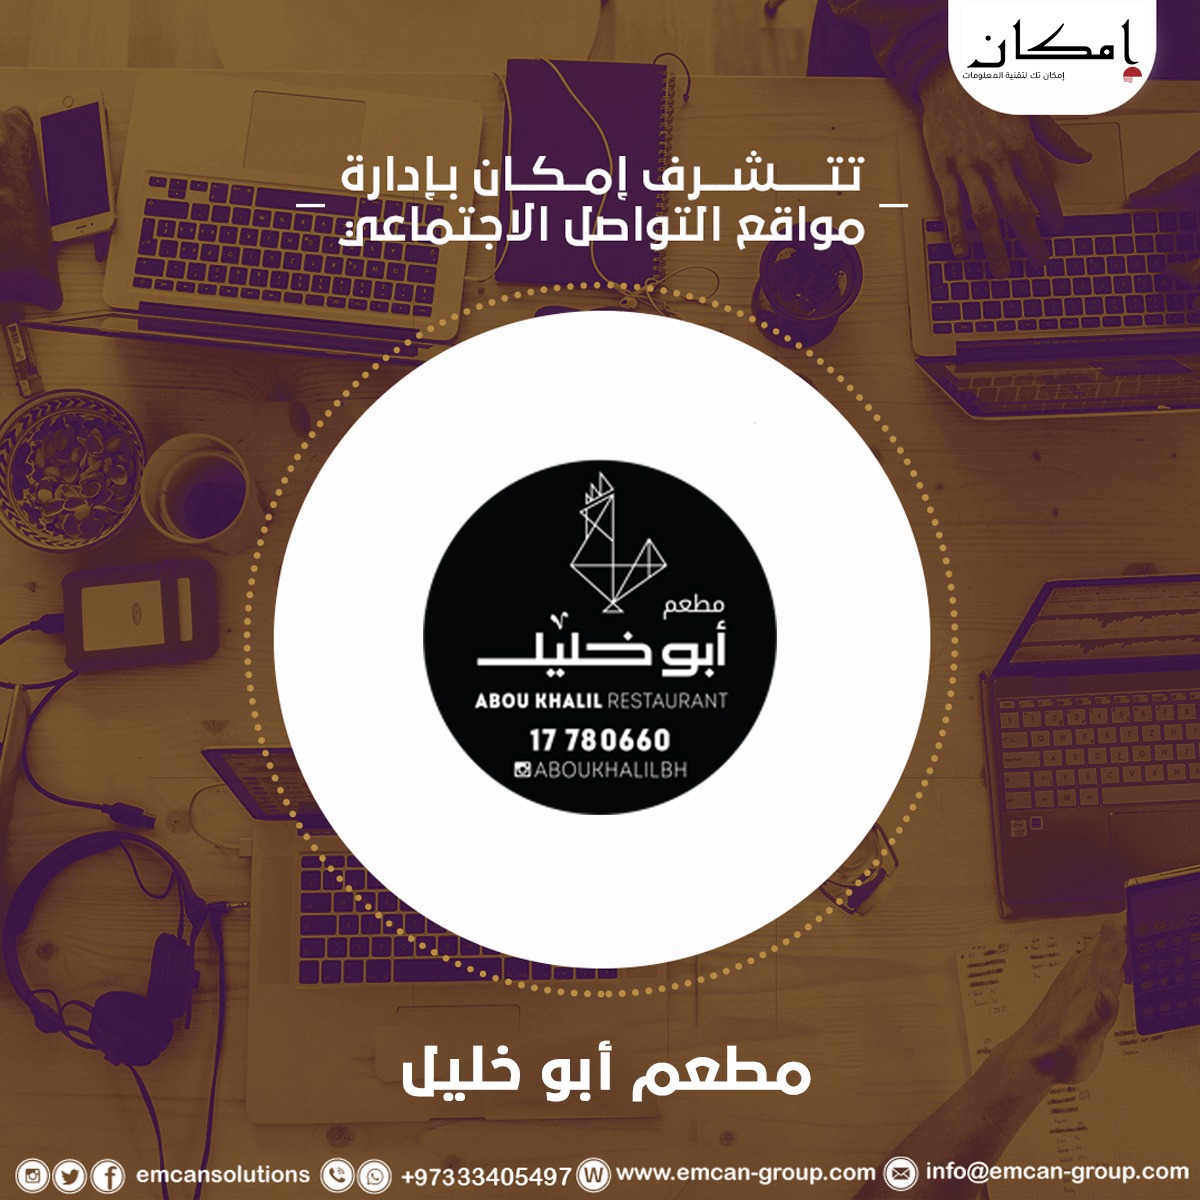 Social media management for Abu Khalil Restaurant